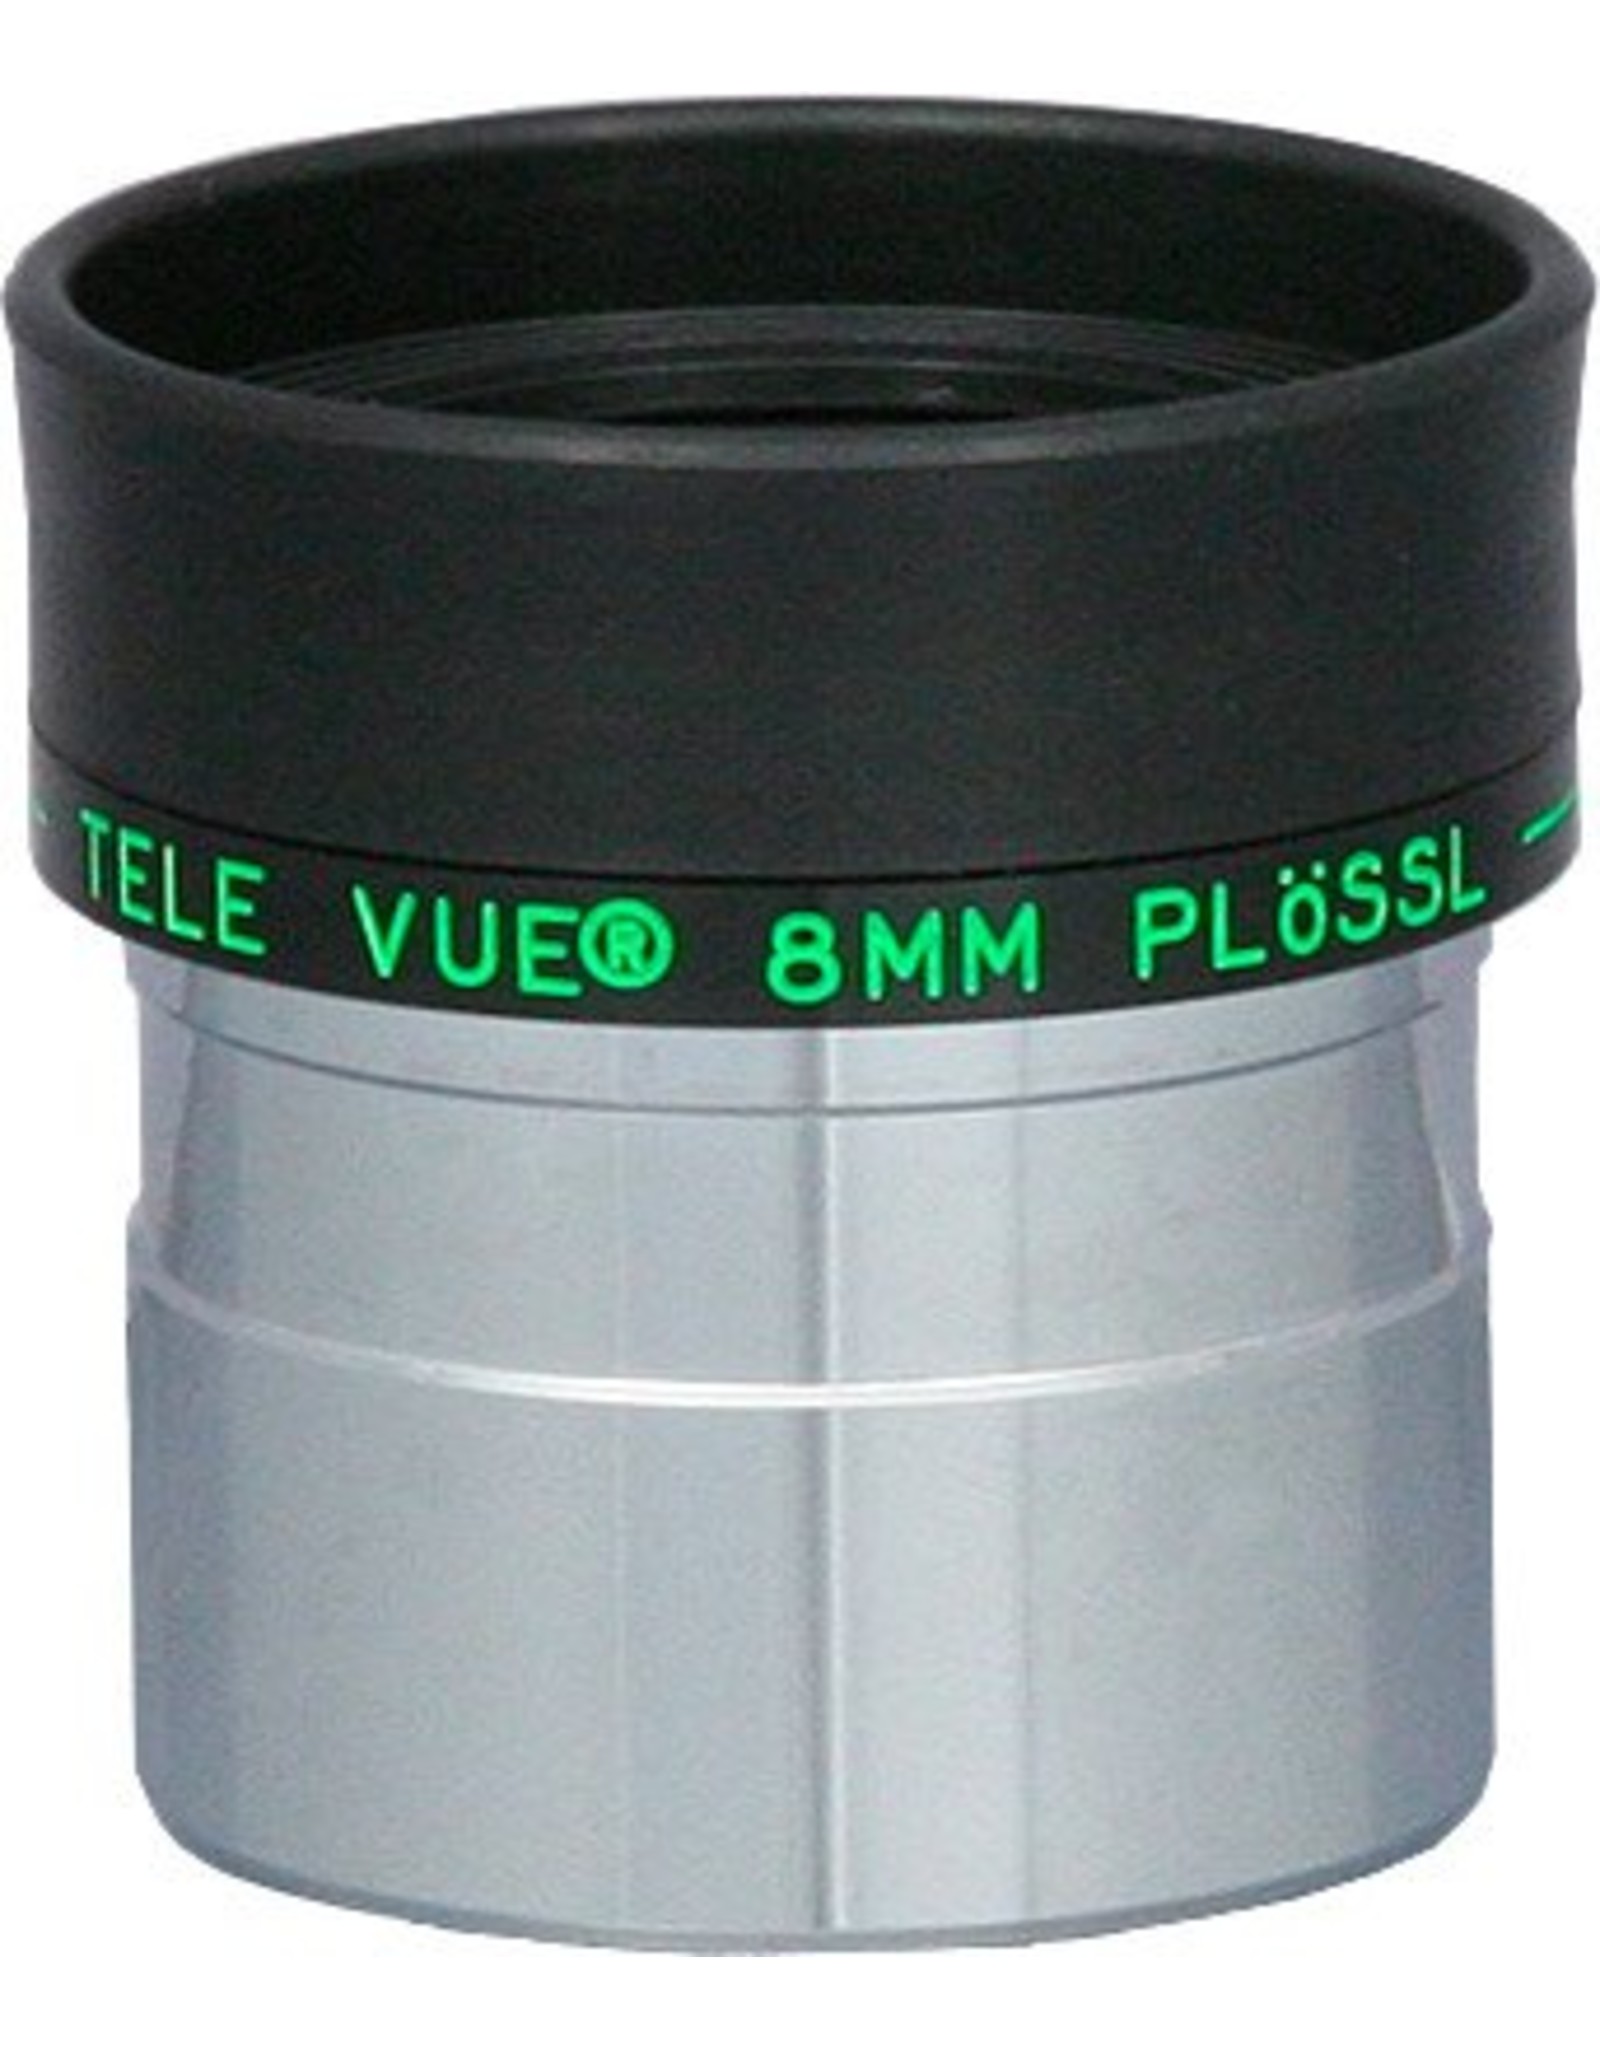 Tele Vue 8mm Plossl Eyepiece - 1.25